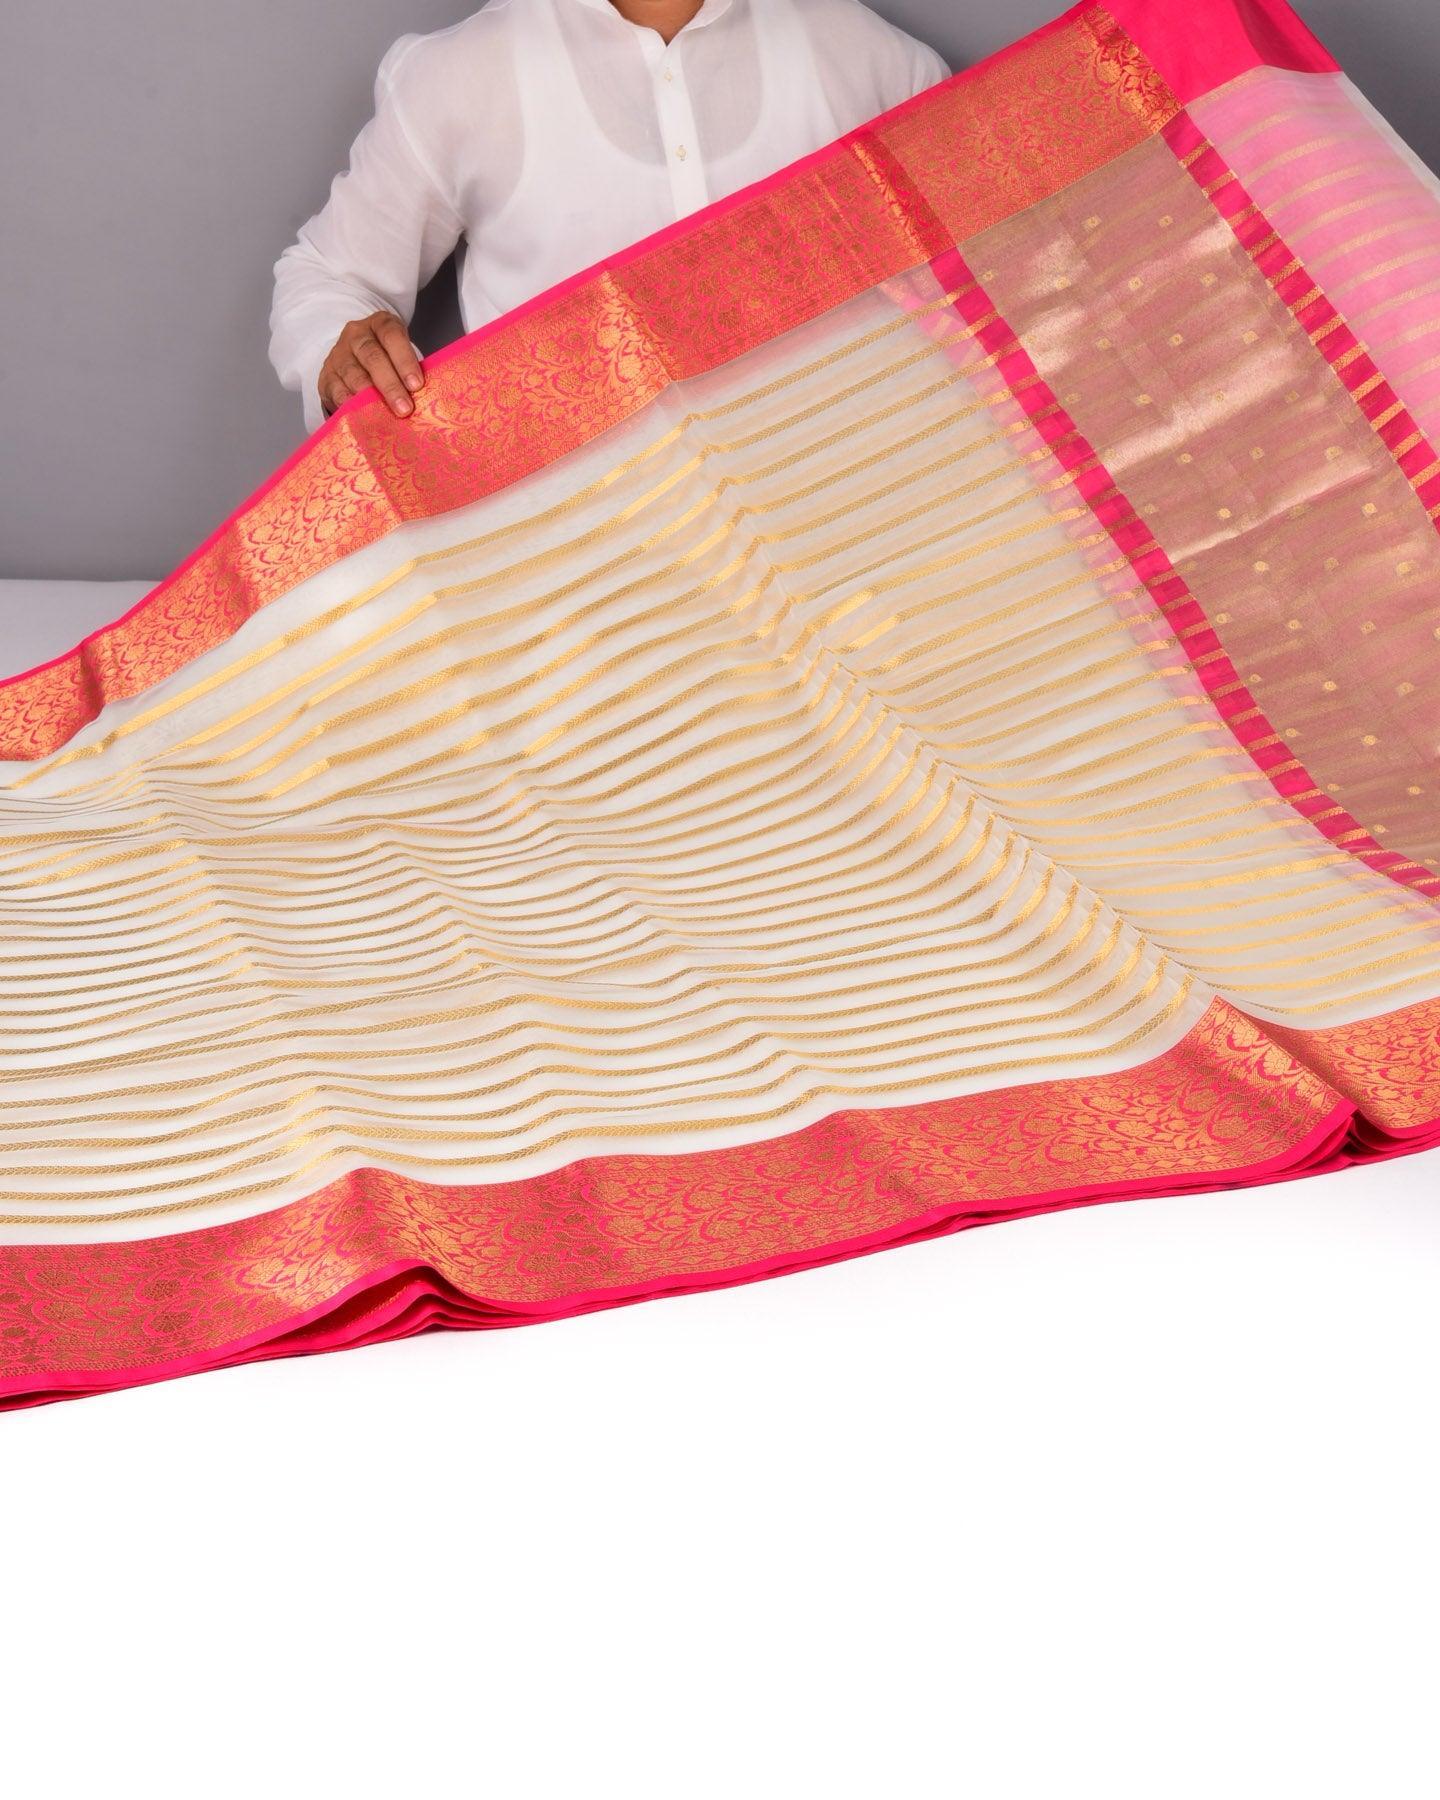 White Banarasi Stripes Cutwork Brocade Woven Art Kora Silk Saree with Contrast Pink Border Pallu - By HolyWeaves, Benares